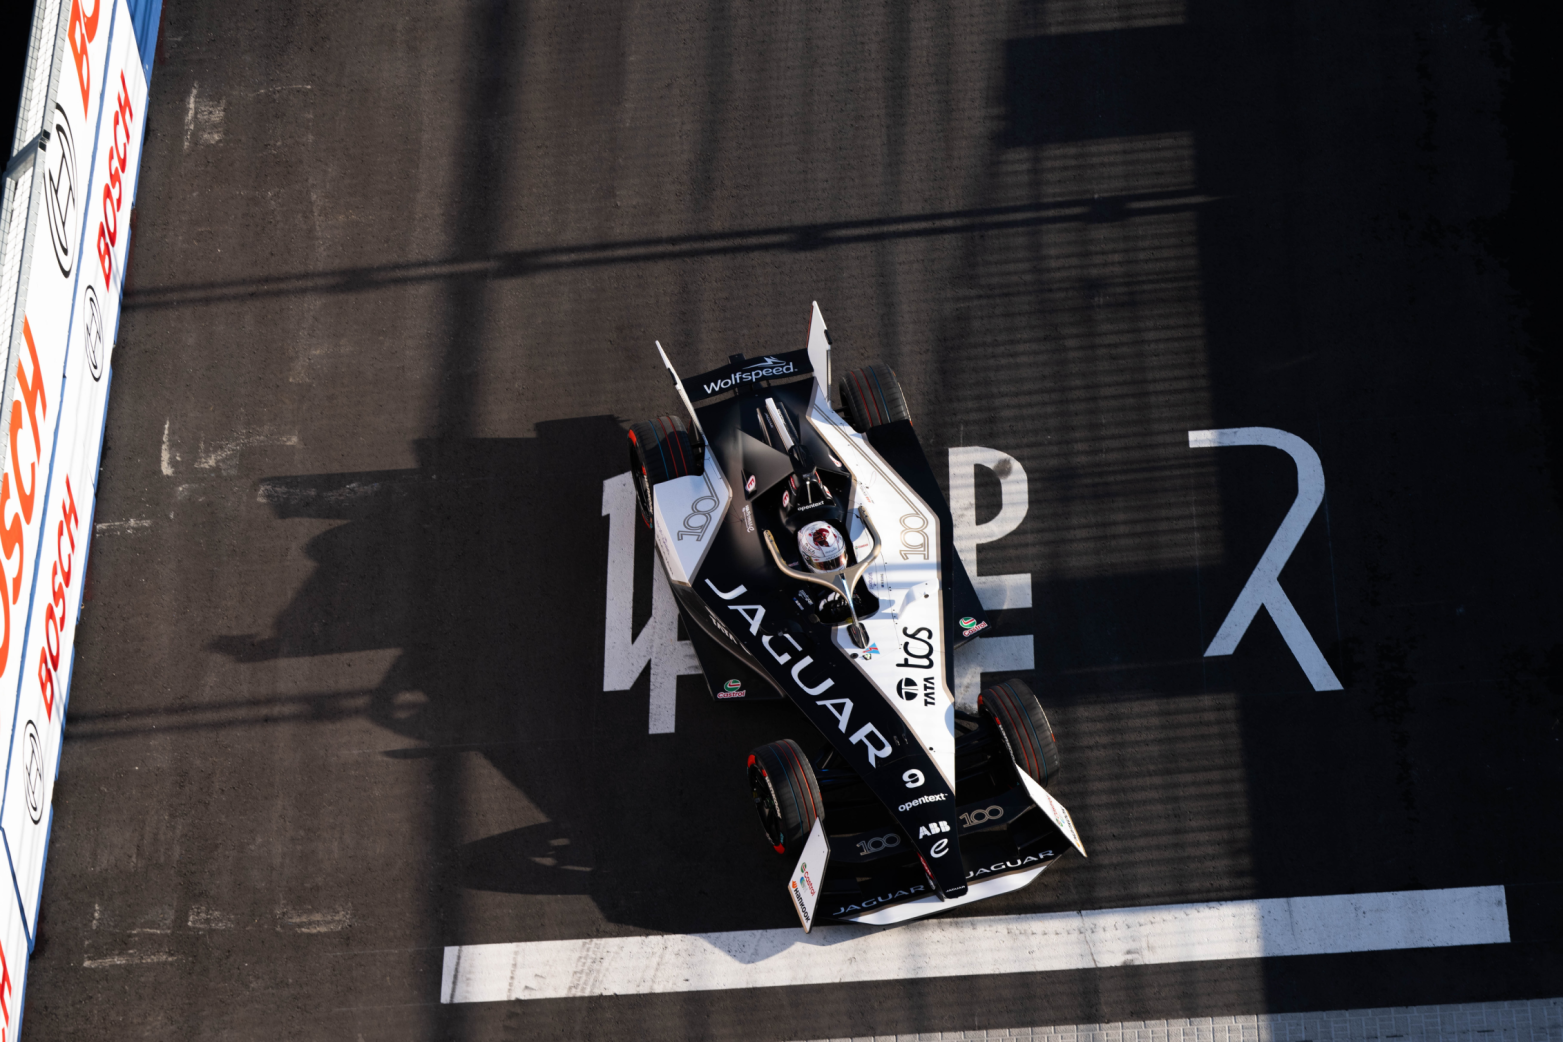 Mitch Evans, Jaguar, Formula E, Tokyo E-Prix